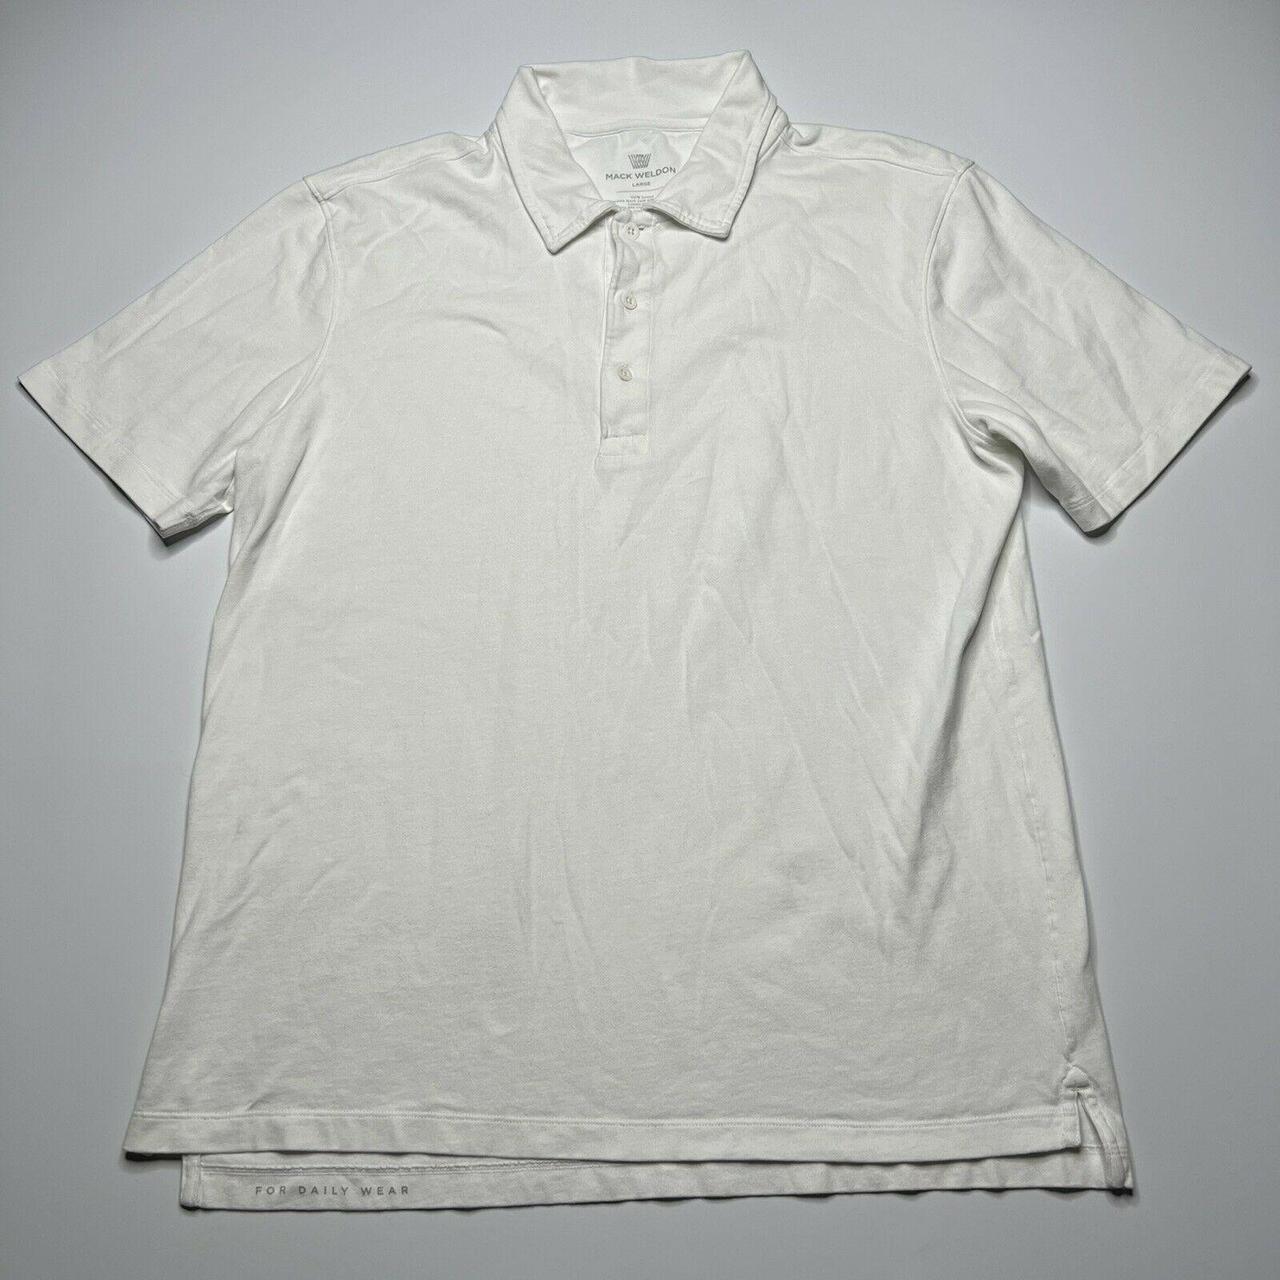 Product Image 1 - Mack Weldon Polo Shirt Mens